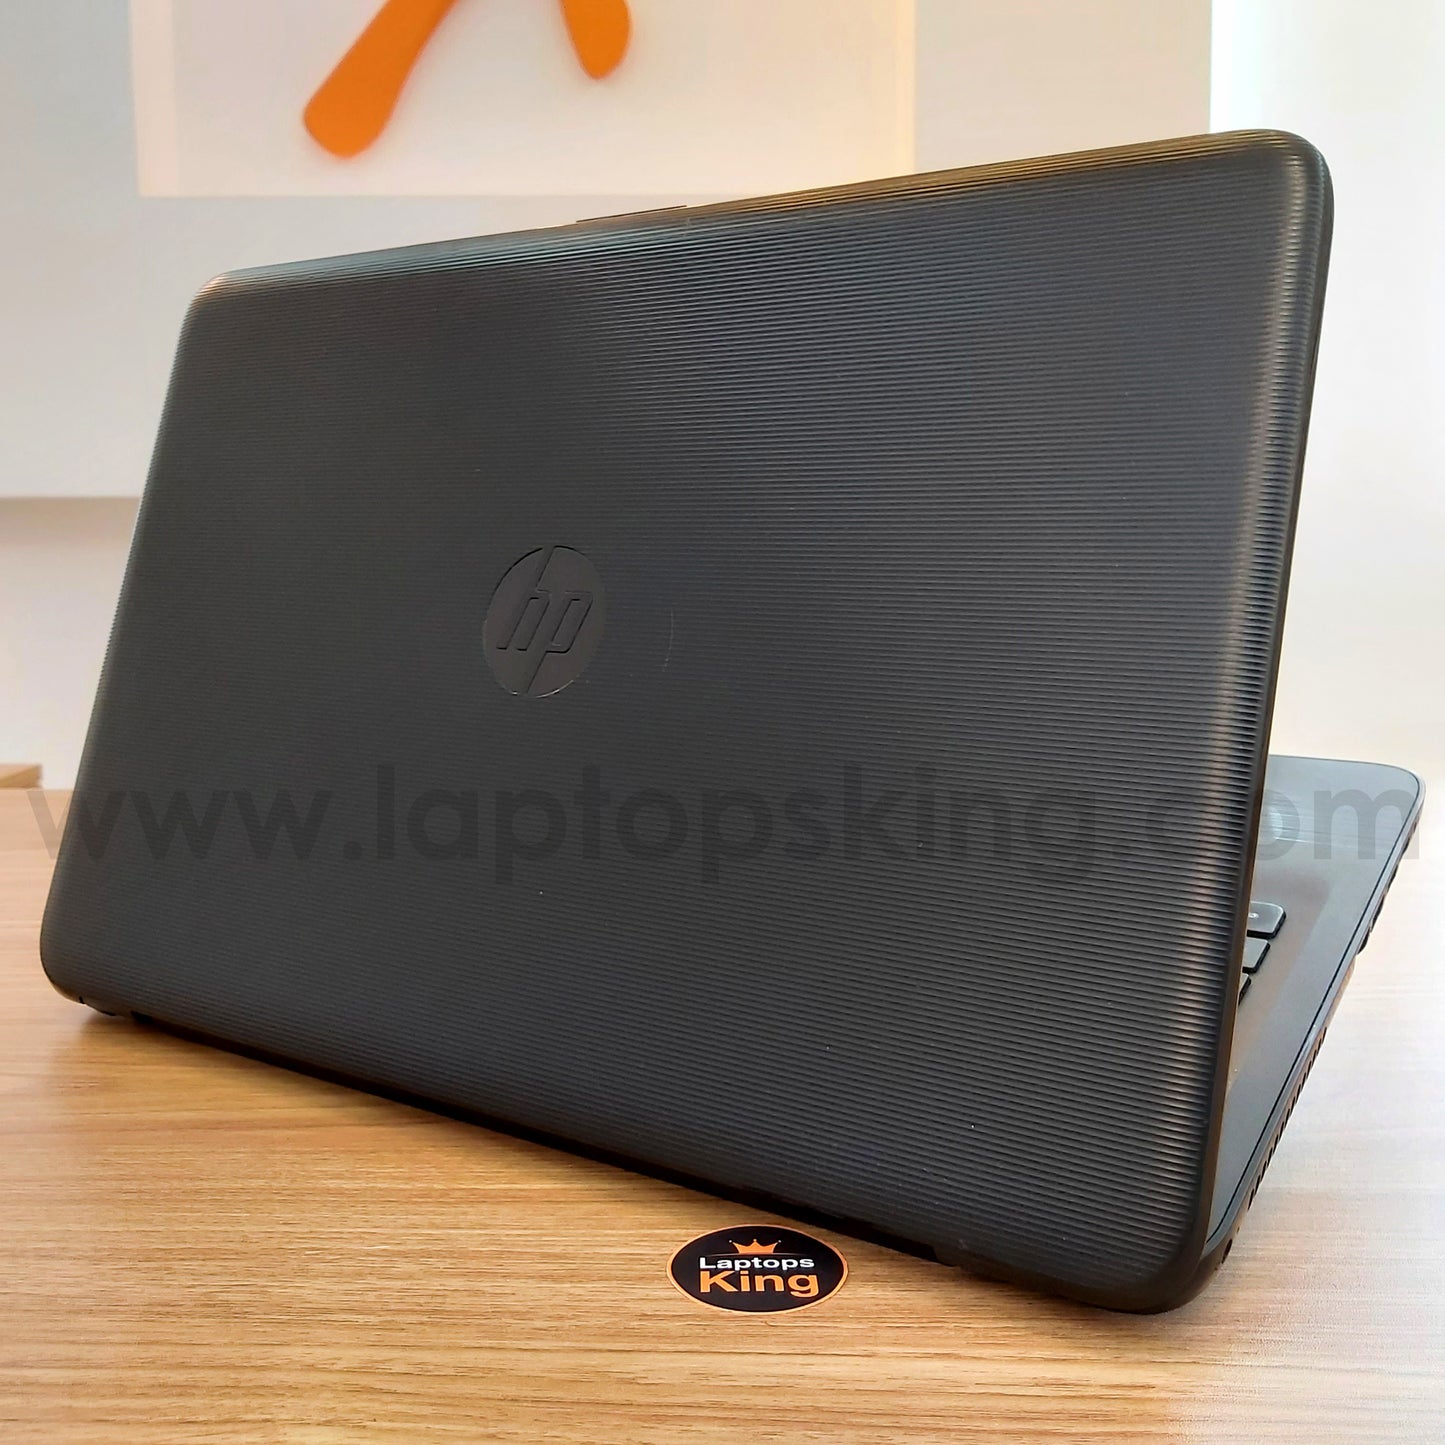 Hp 15" i7-7500U Vga R7 2gb Laptop (Used Very Clean)